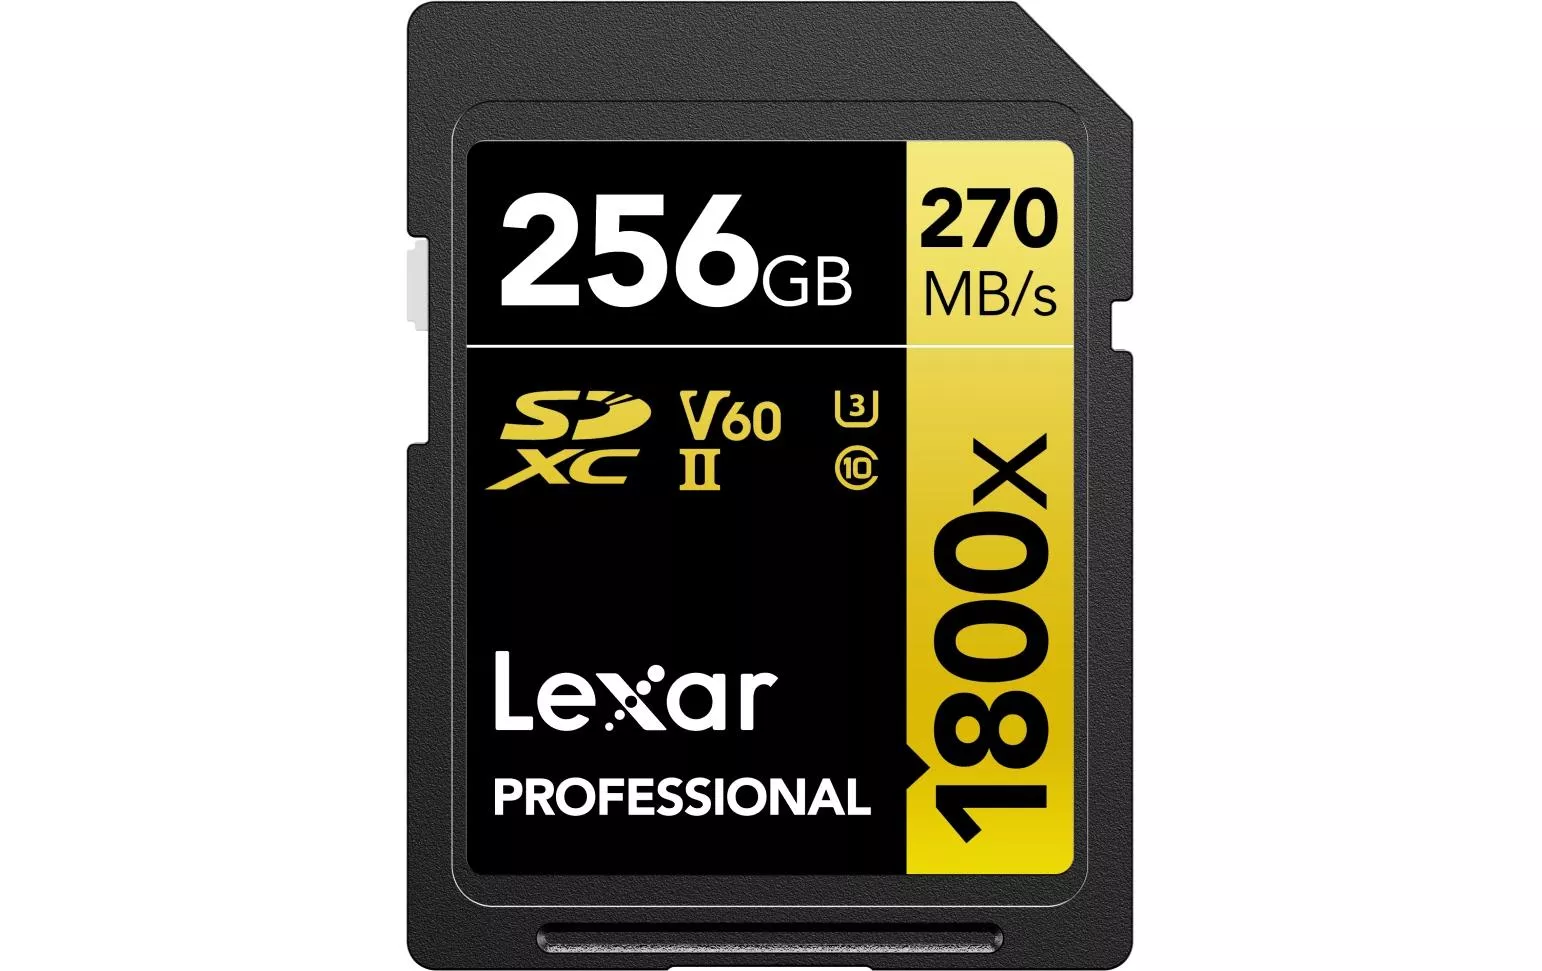 Carte SDXC Professional 1800x Gold Series 256 GB